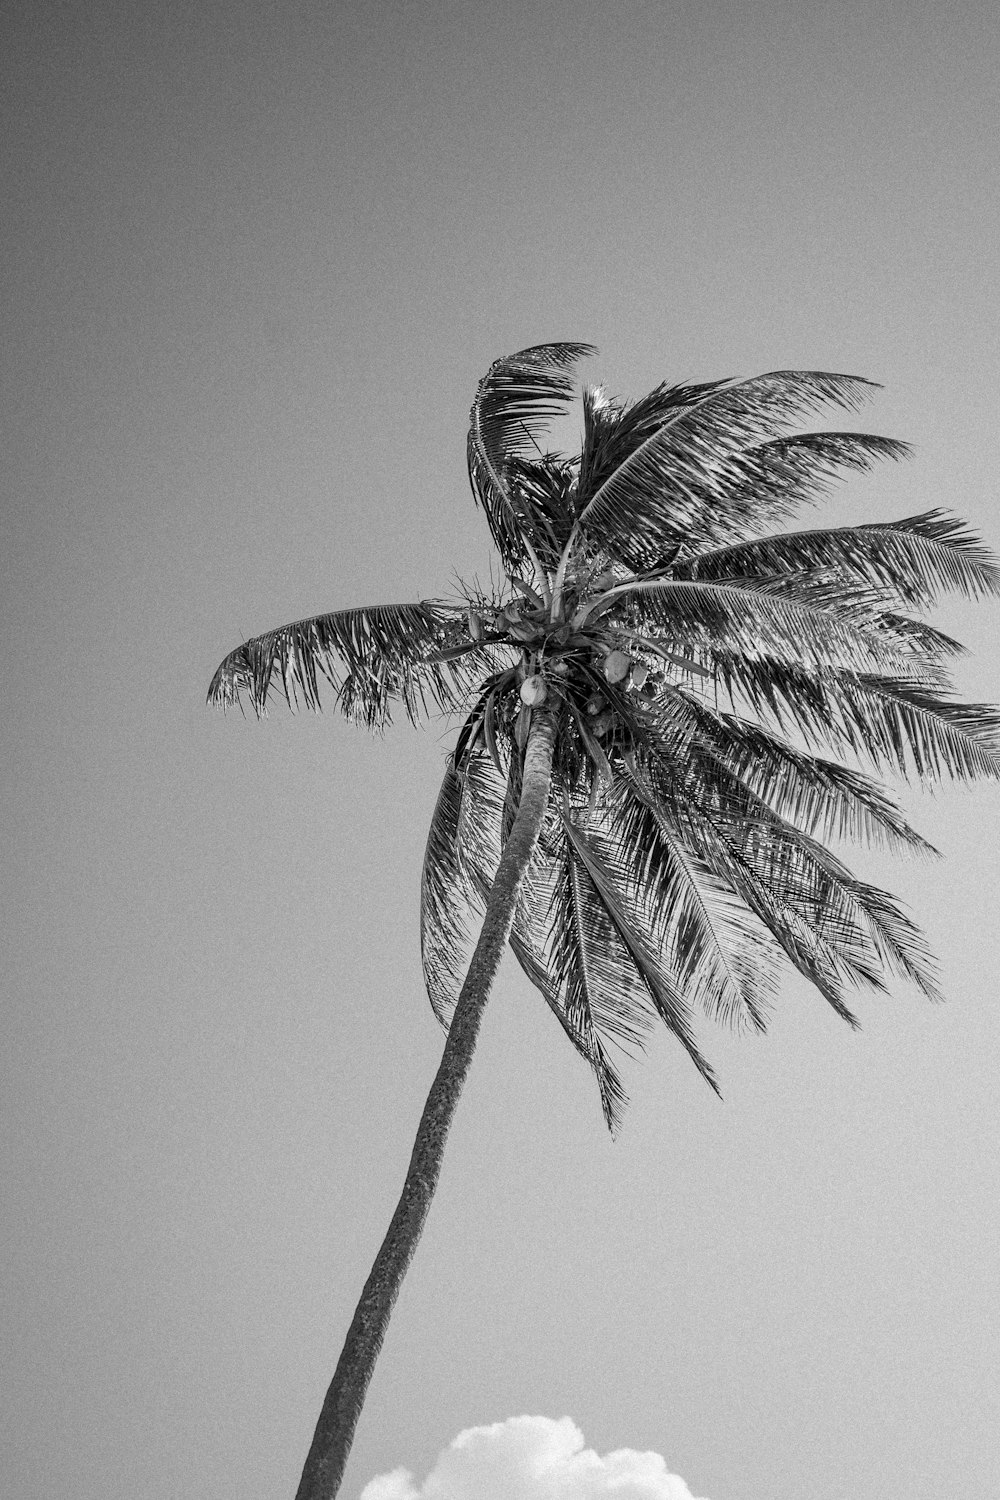 a palm tree with a cloudy sky